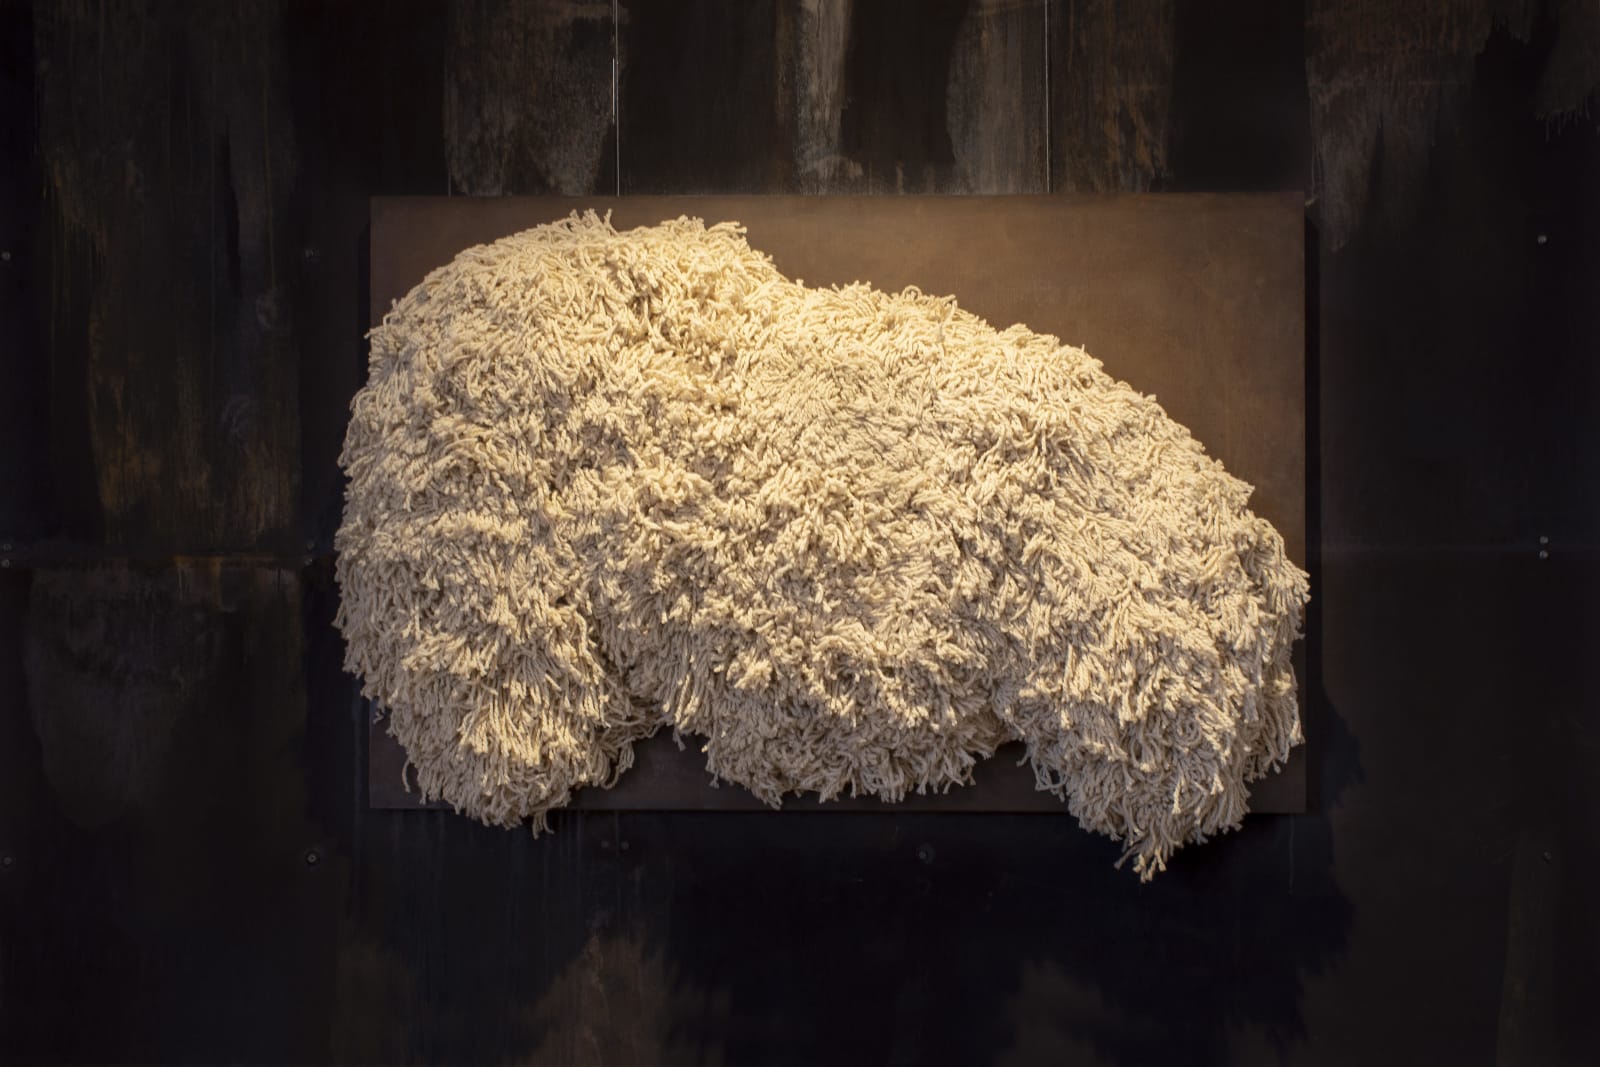 Amine El Gotaibi, Brebis Séduction (The seducing sheep), 2021 | MCC Gallery